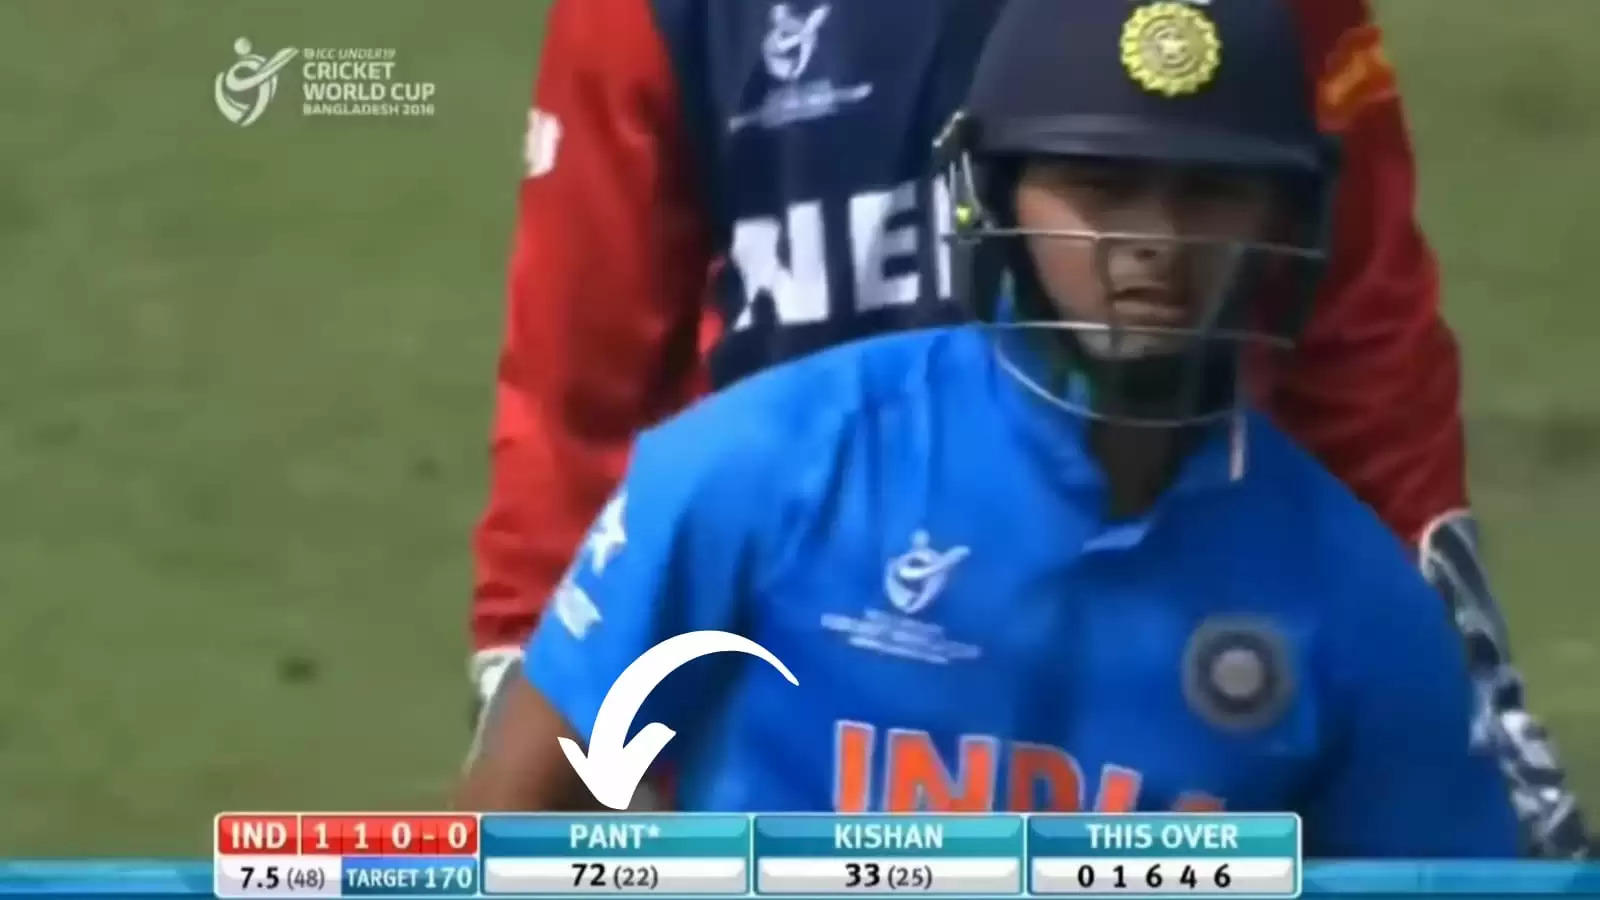 WATCH: Rishabh Pant smashing it as an opener in the U19 World Cup